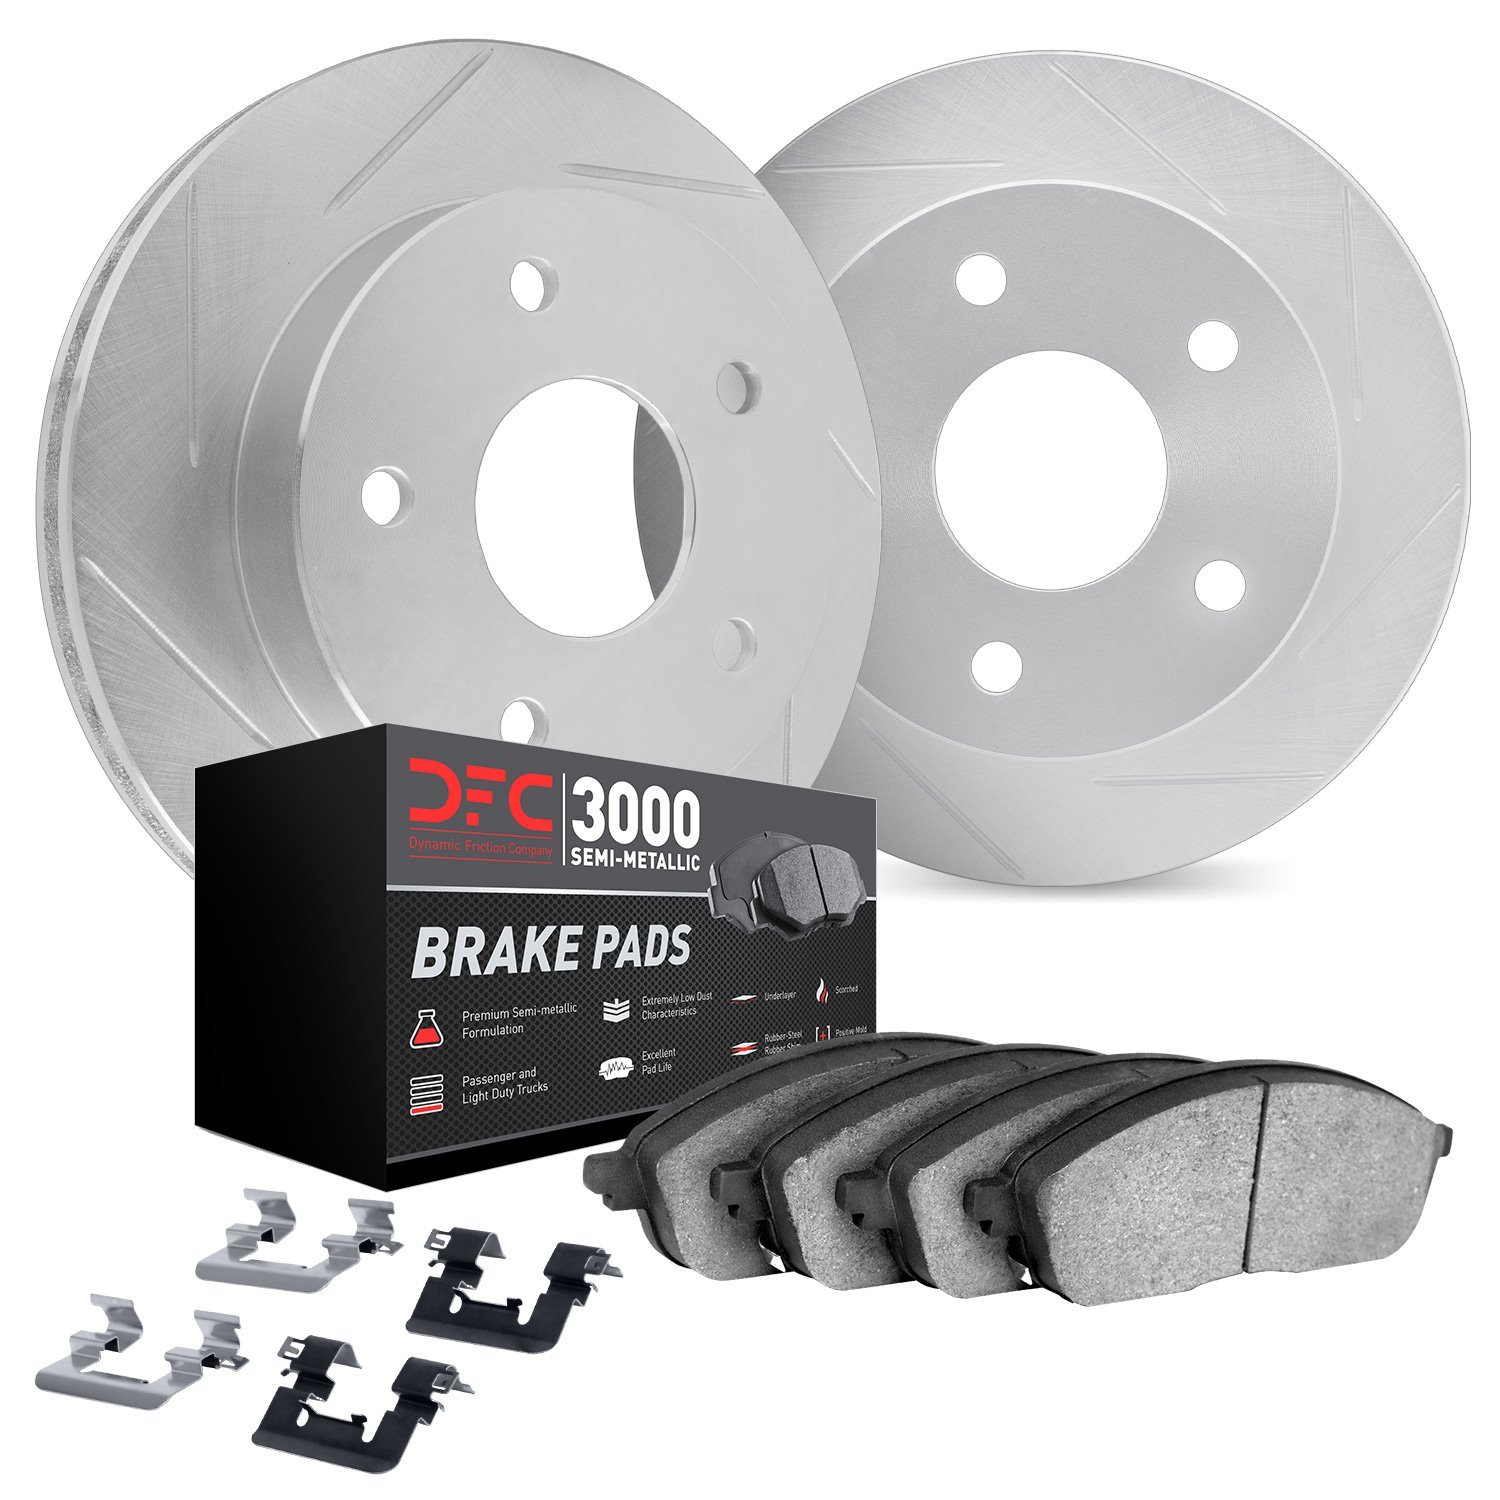 5112-73083 Slotted Brake Rotors with 3000-Series Semi-Metallic Brake Pads Kit & Hardware [Silver], Fits Select Audi/Volkswagen,